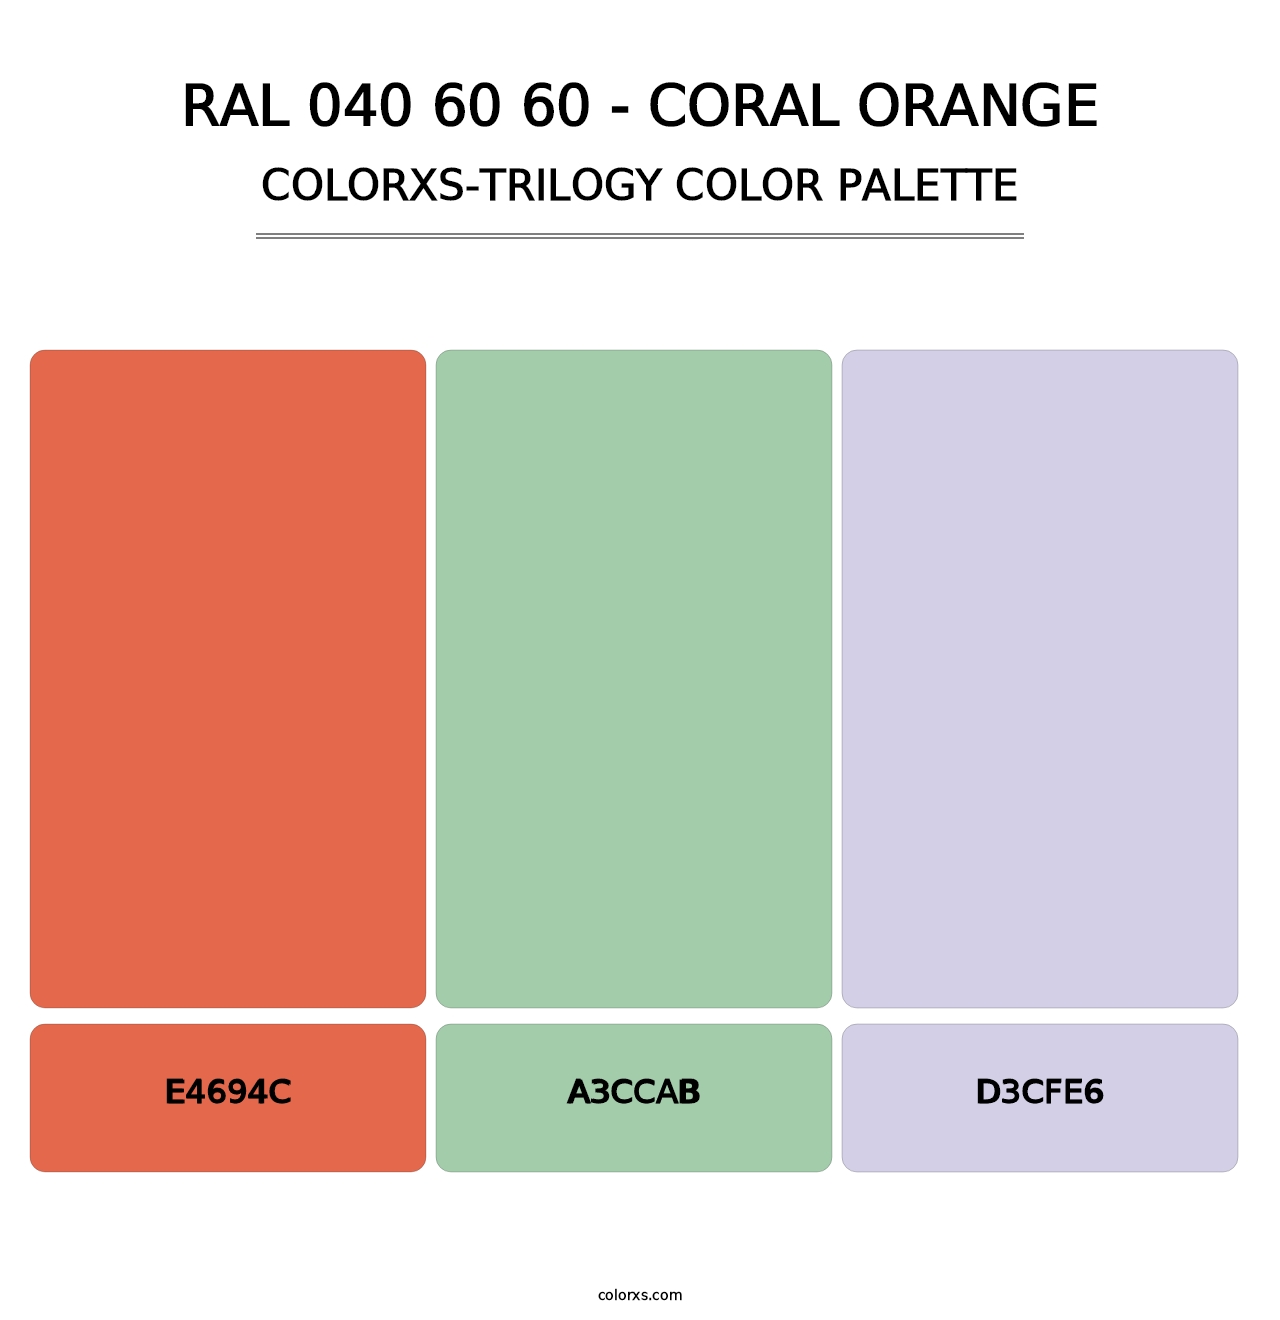 RAL 040 60 60 - Coral Orange - Colorxs Trilogy Palette